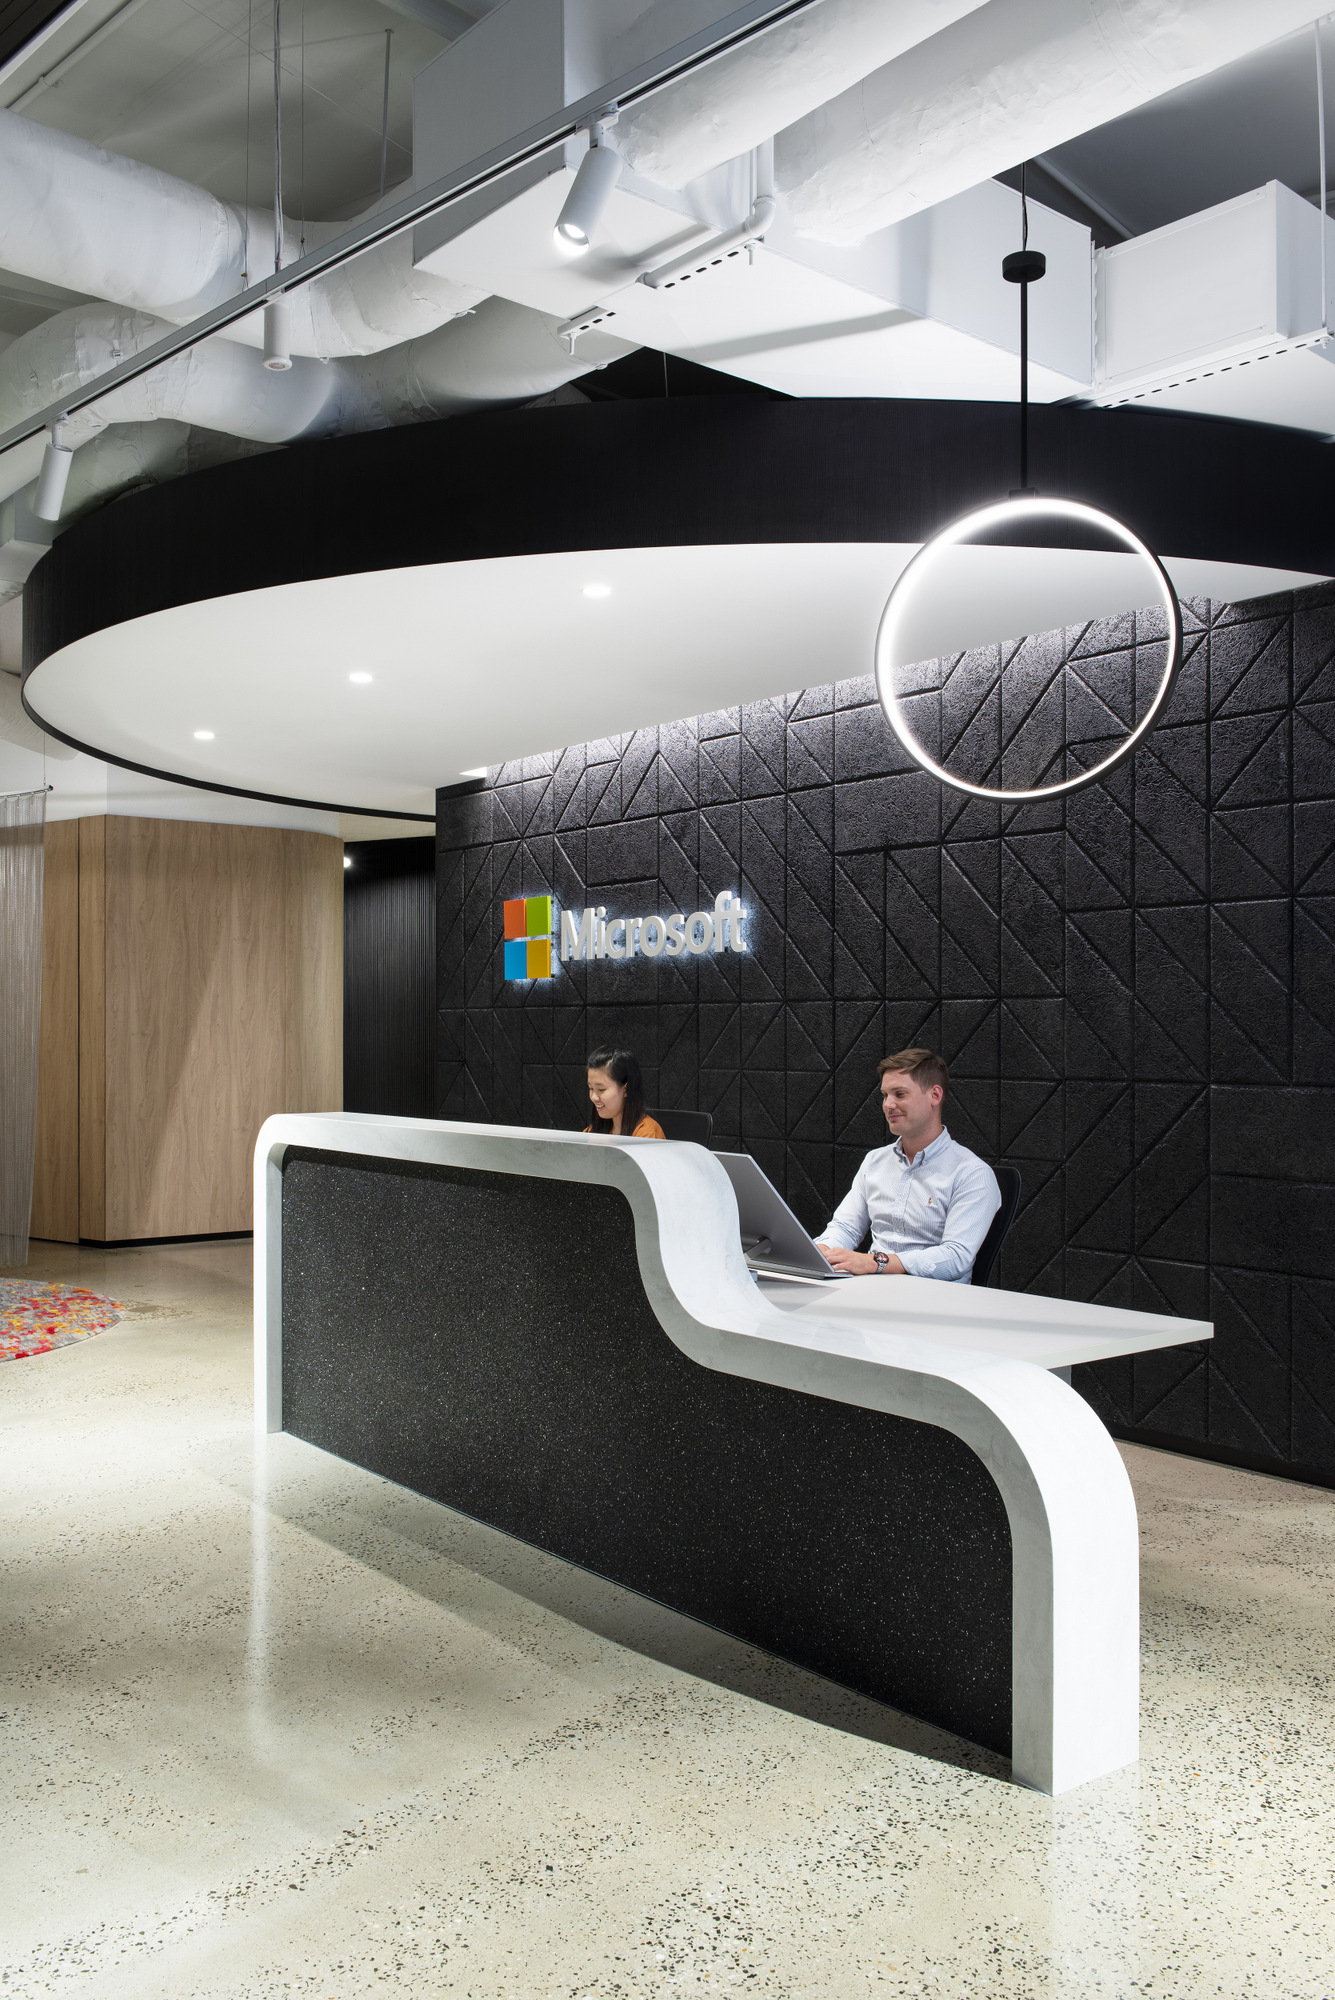 Microsoft(マイクロソフト)のオフィス - メルボルン, オーストラリアの受付/エントランススペース